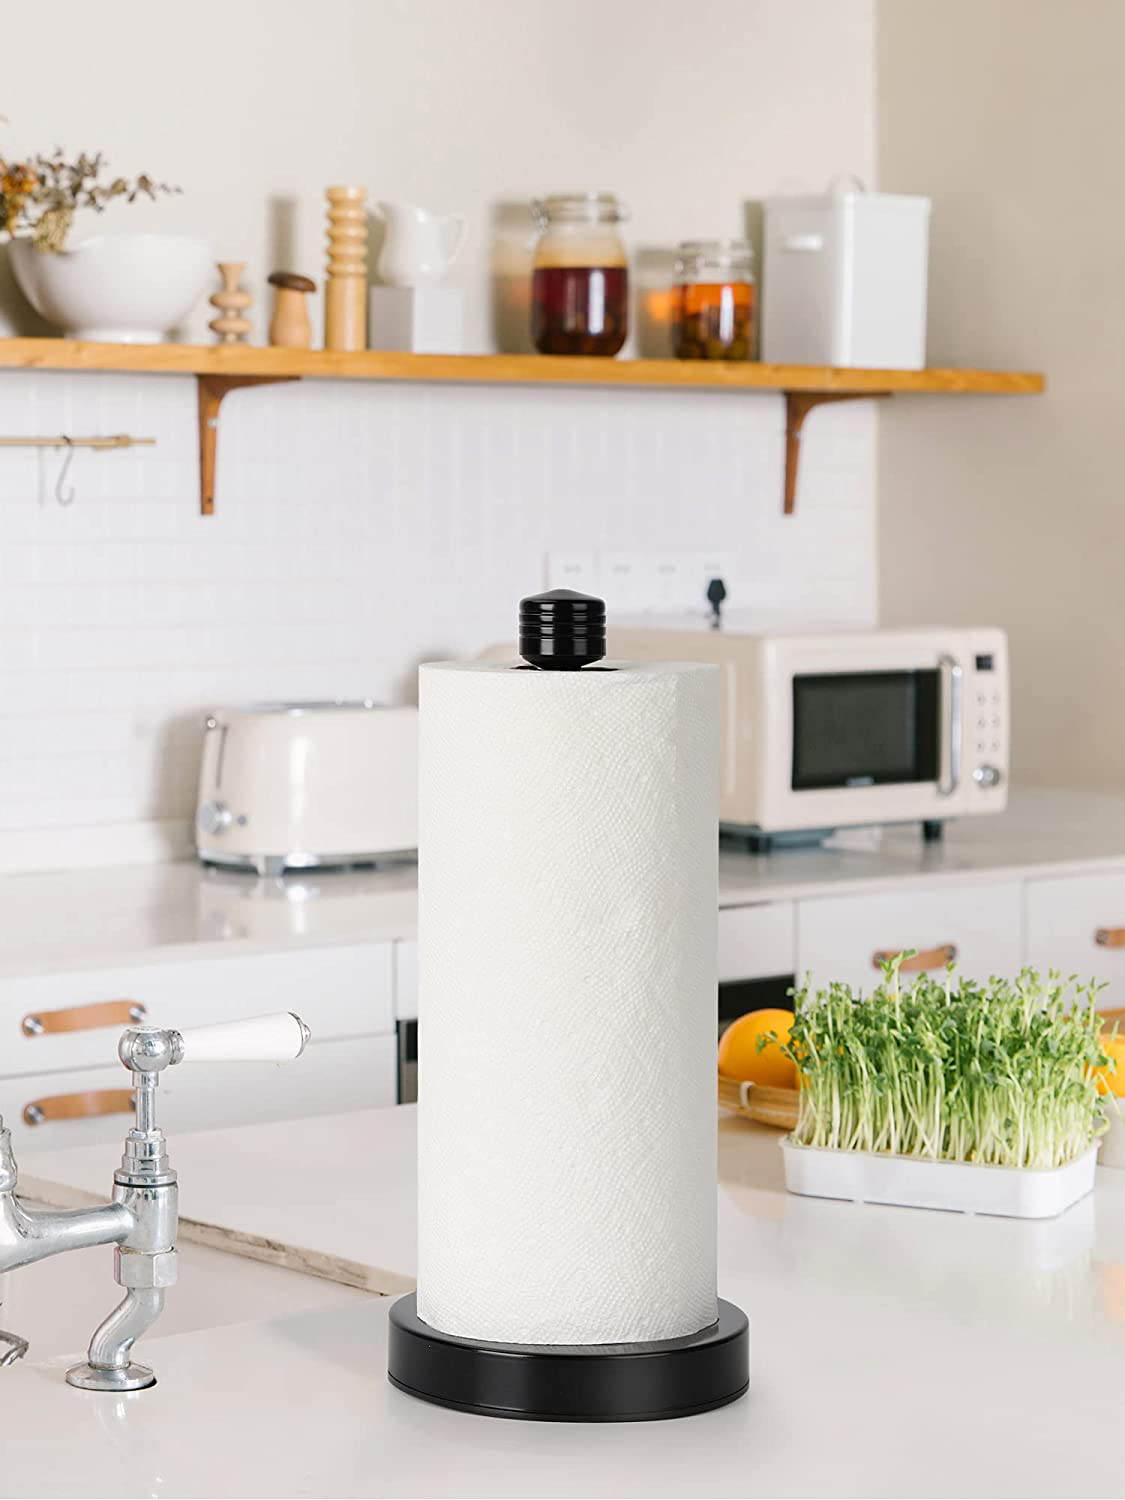 SMARTAKE Standing Paper Towel Holder, Damping Ratchet Design Paper